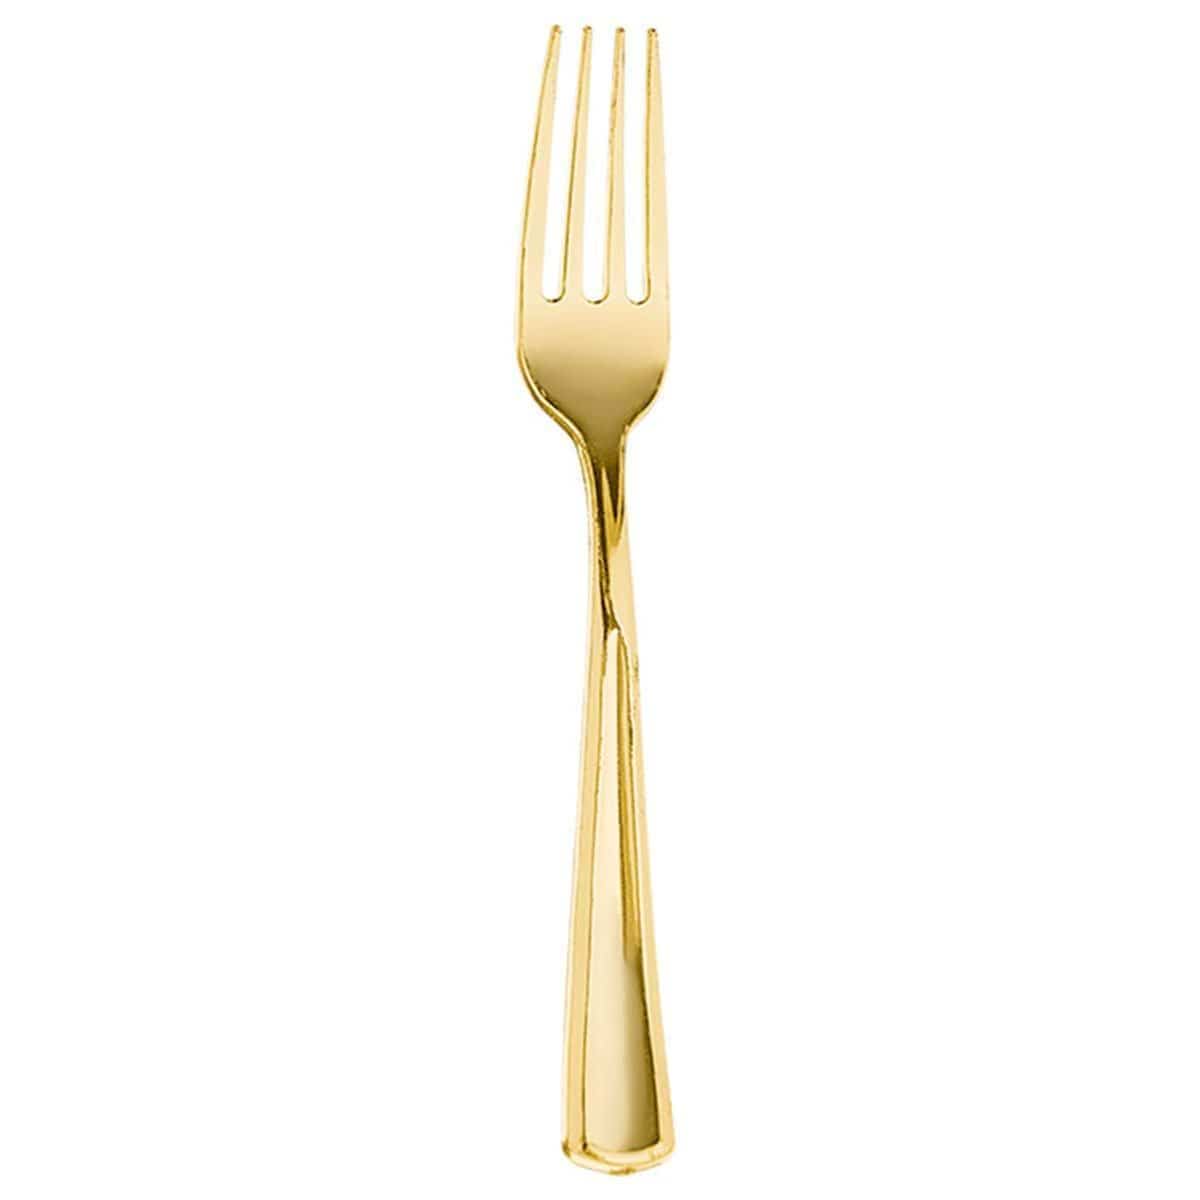 Buy Plasticware Premium Forks - Gold 32/pkg sold at Party Expert